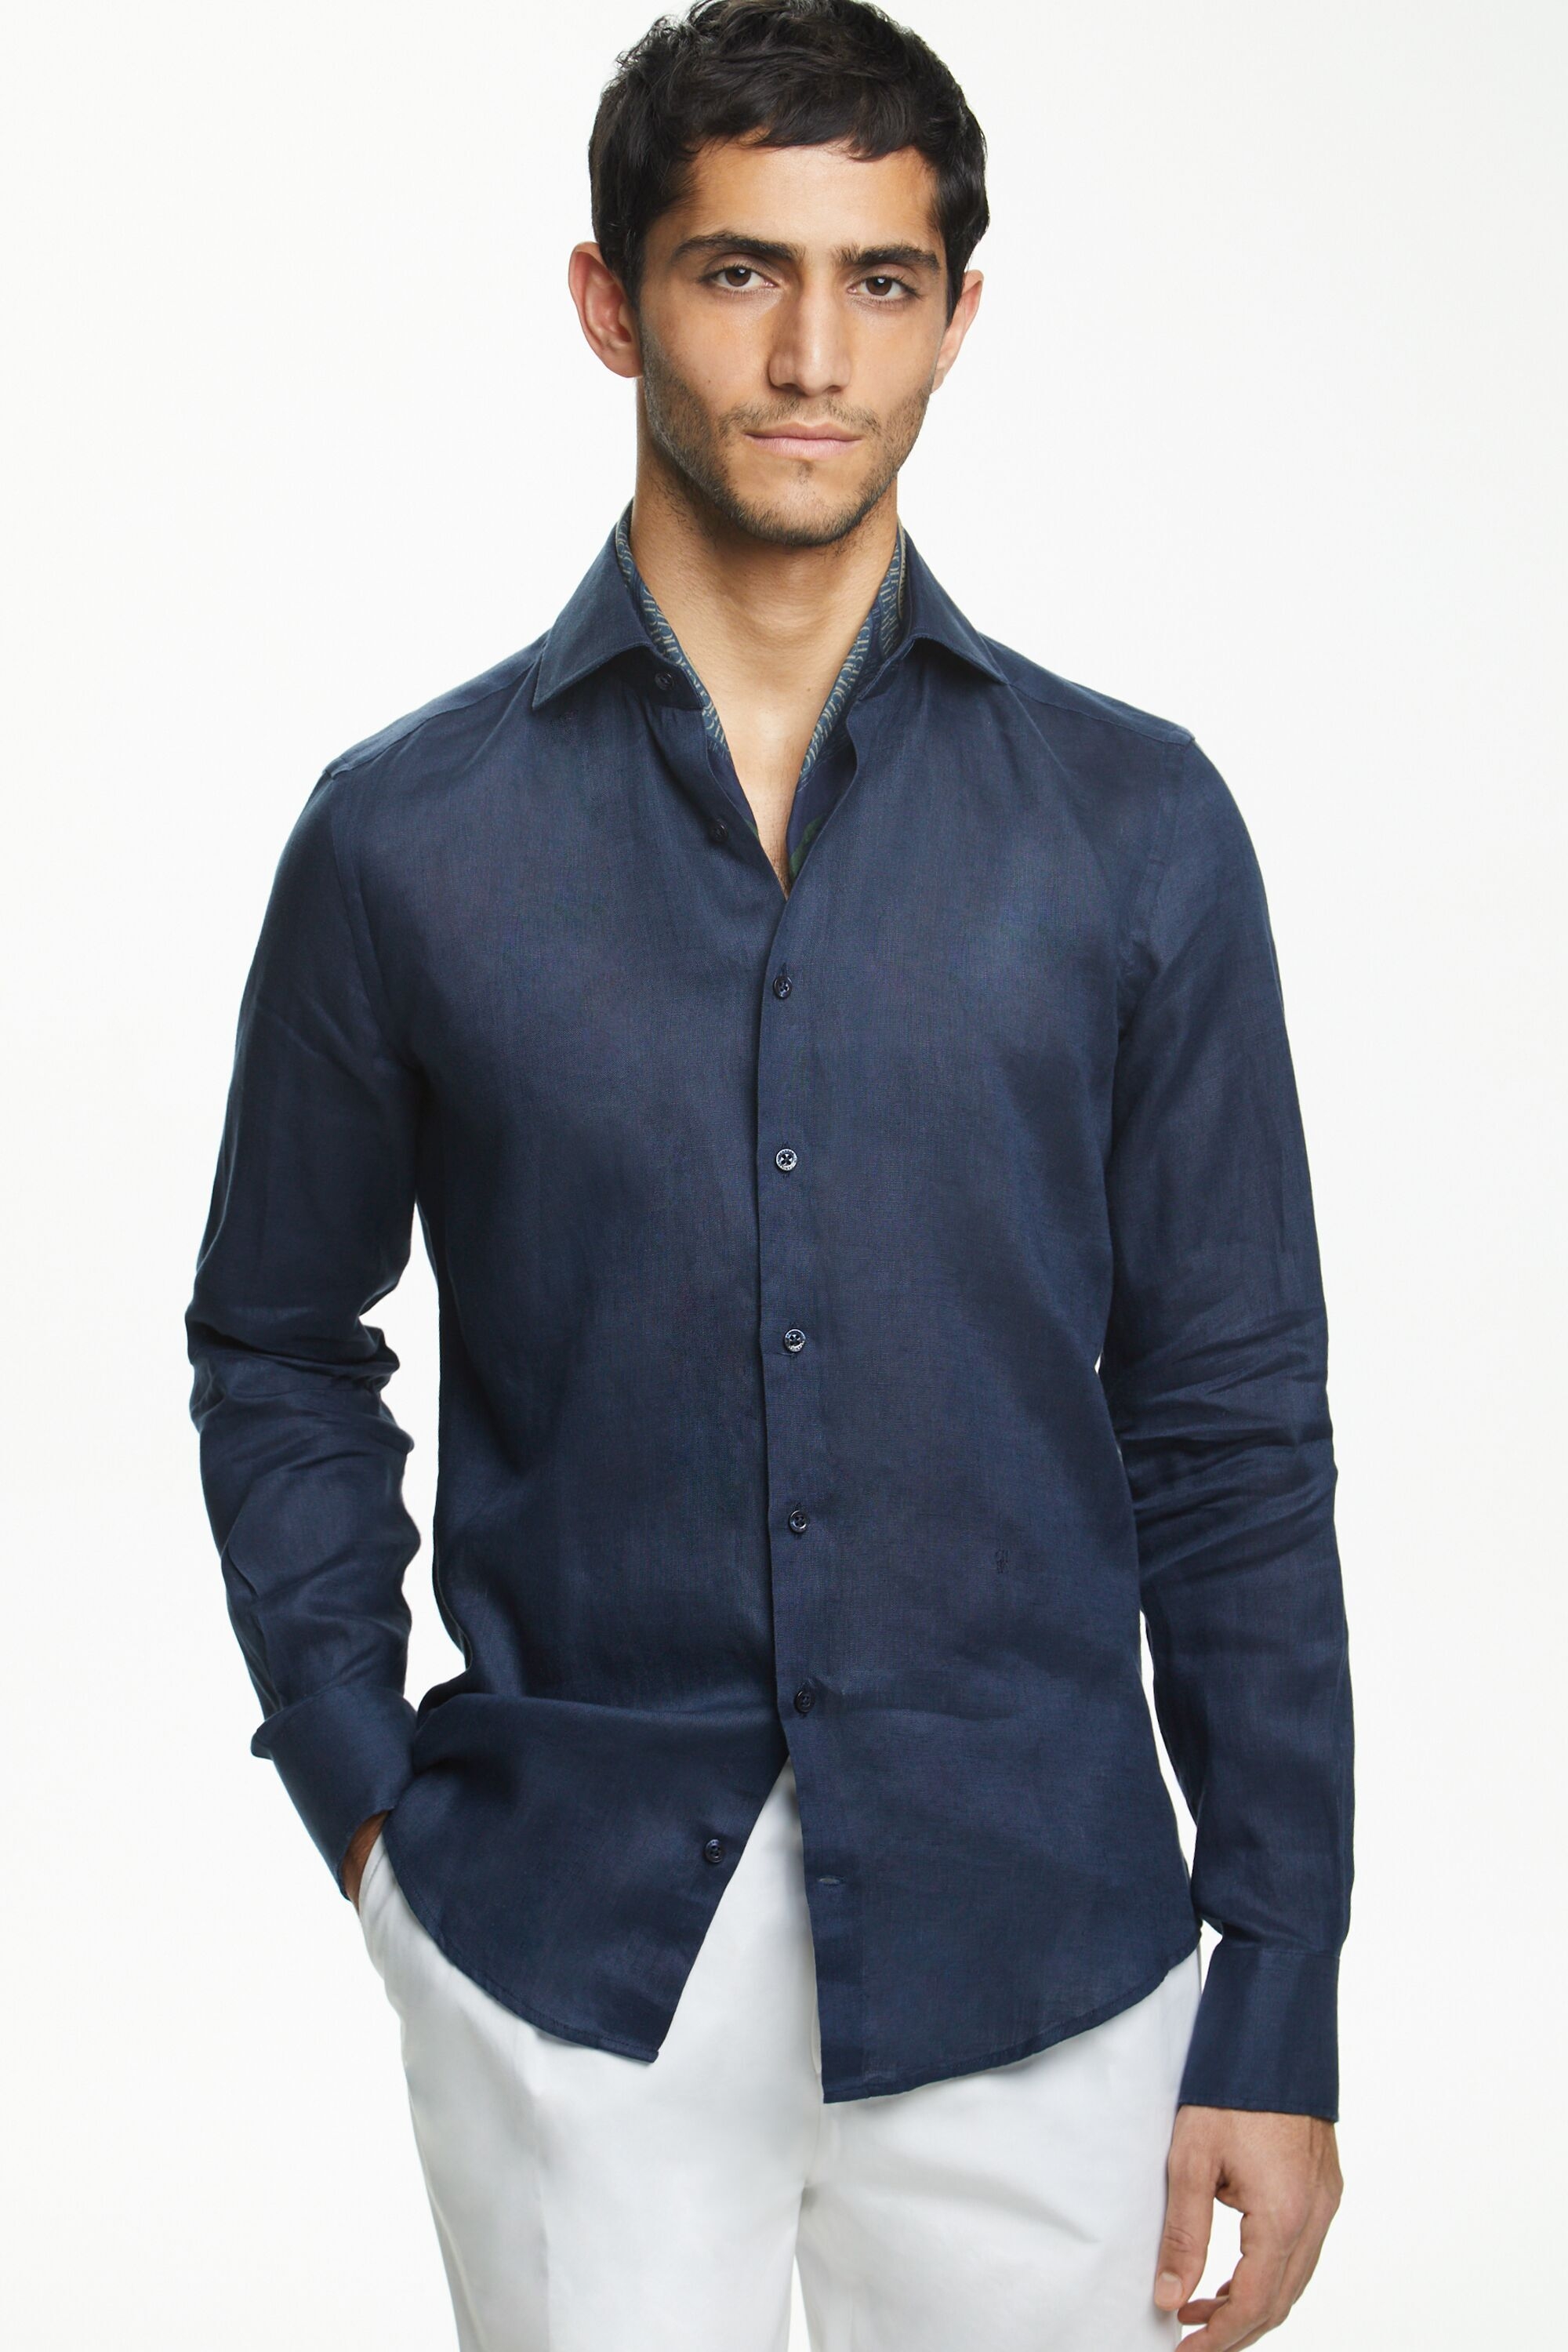 Linen shirt with spread collar